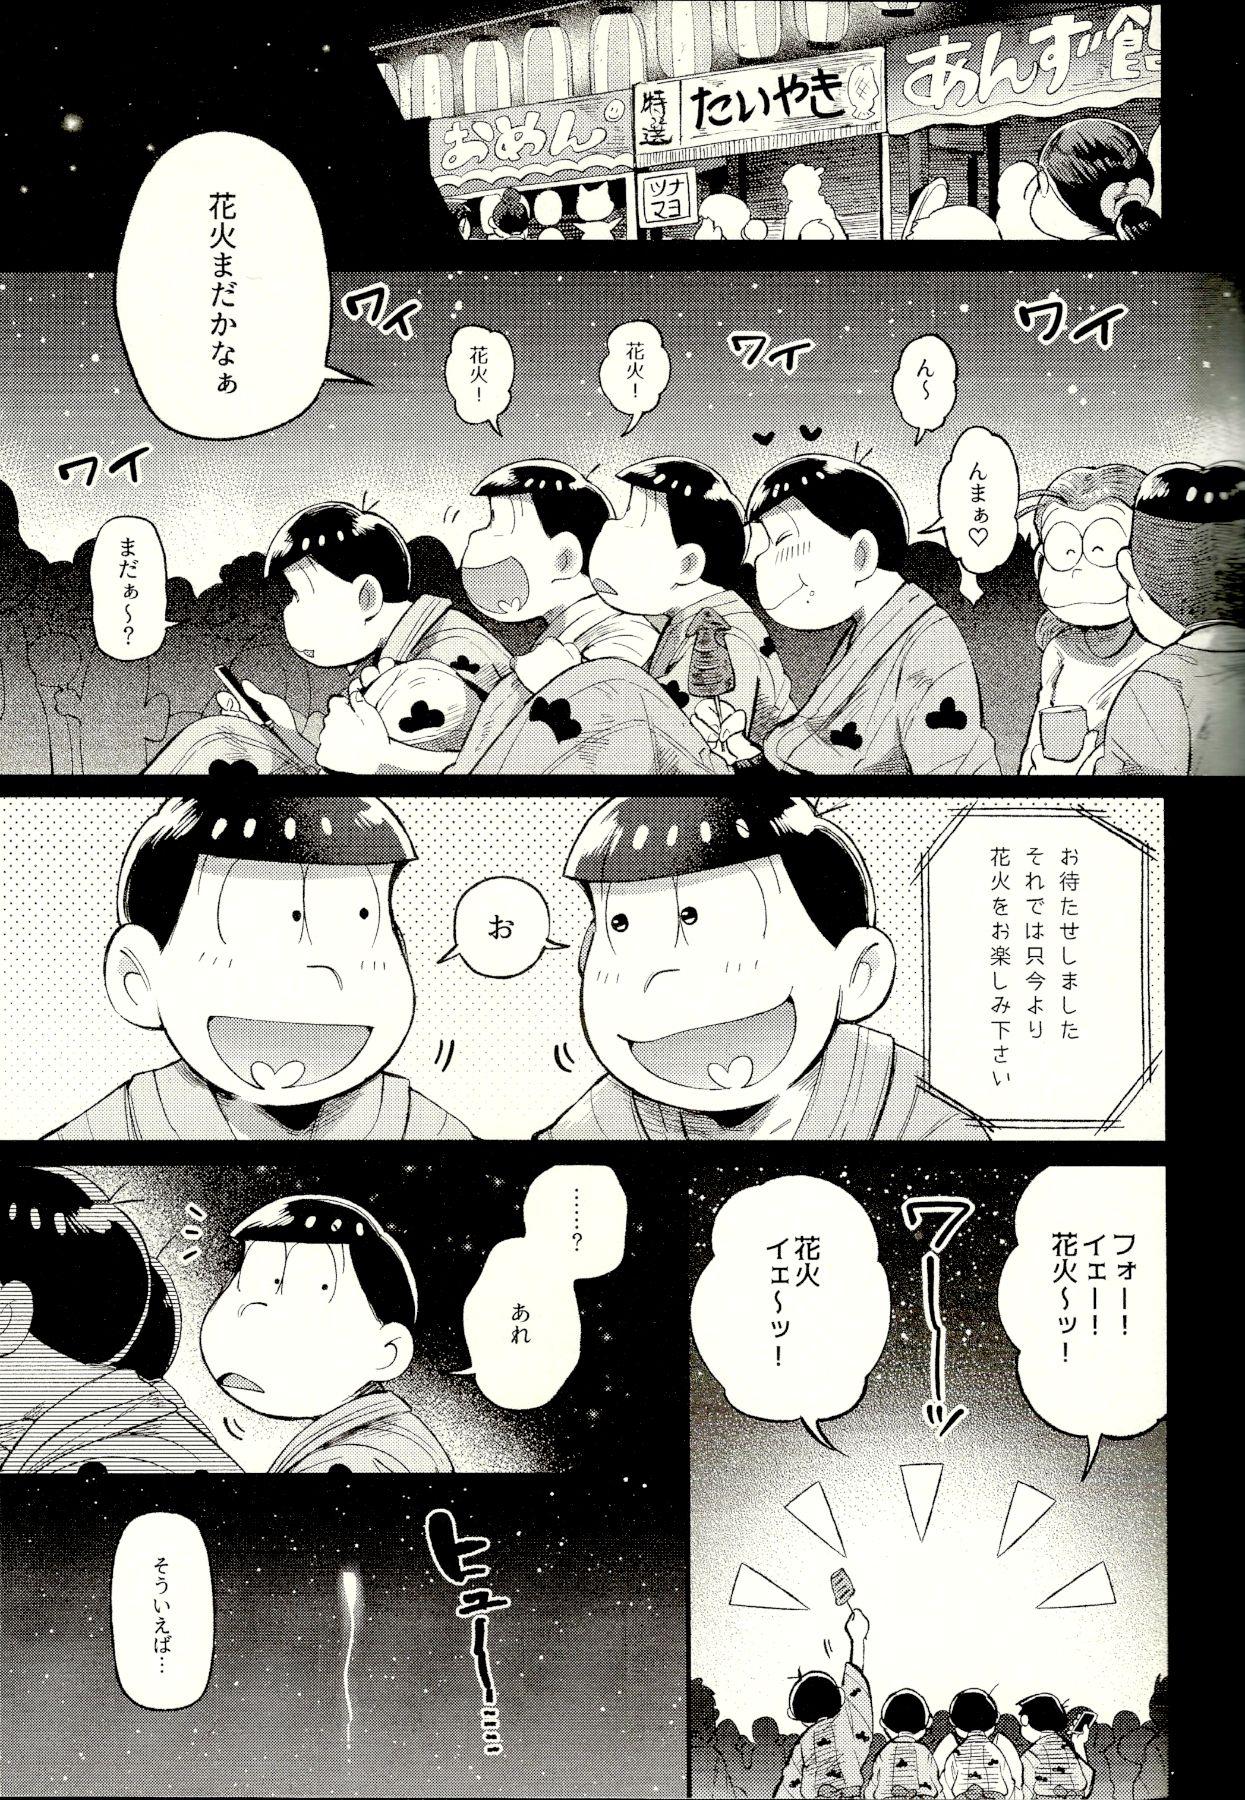 Farting Season in the Summer - Osomatsu san 3way - Page 3